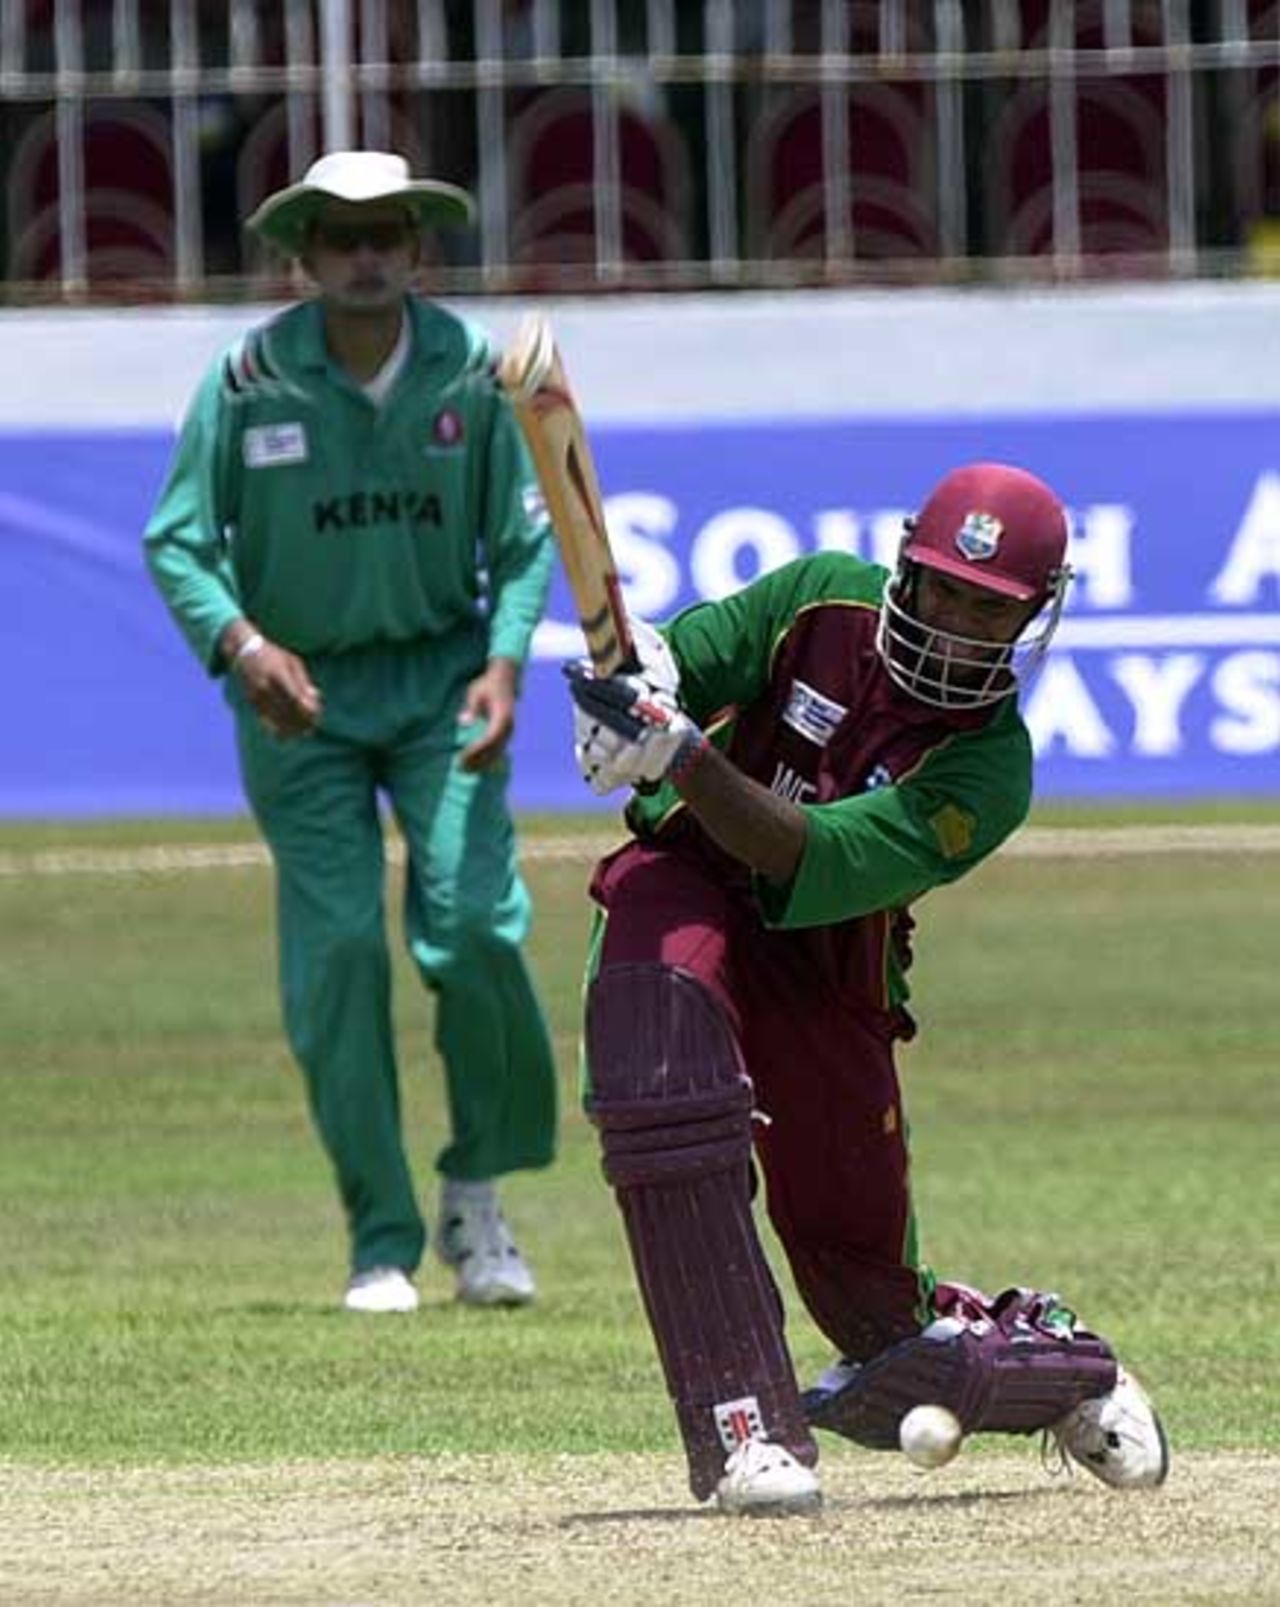 ICC Champions Trophy, Kenya v West Indies, 17th September 2002, Colombo